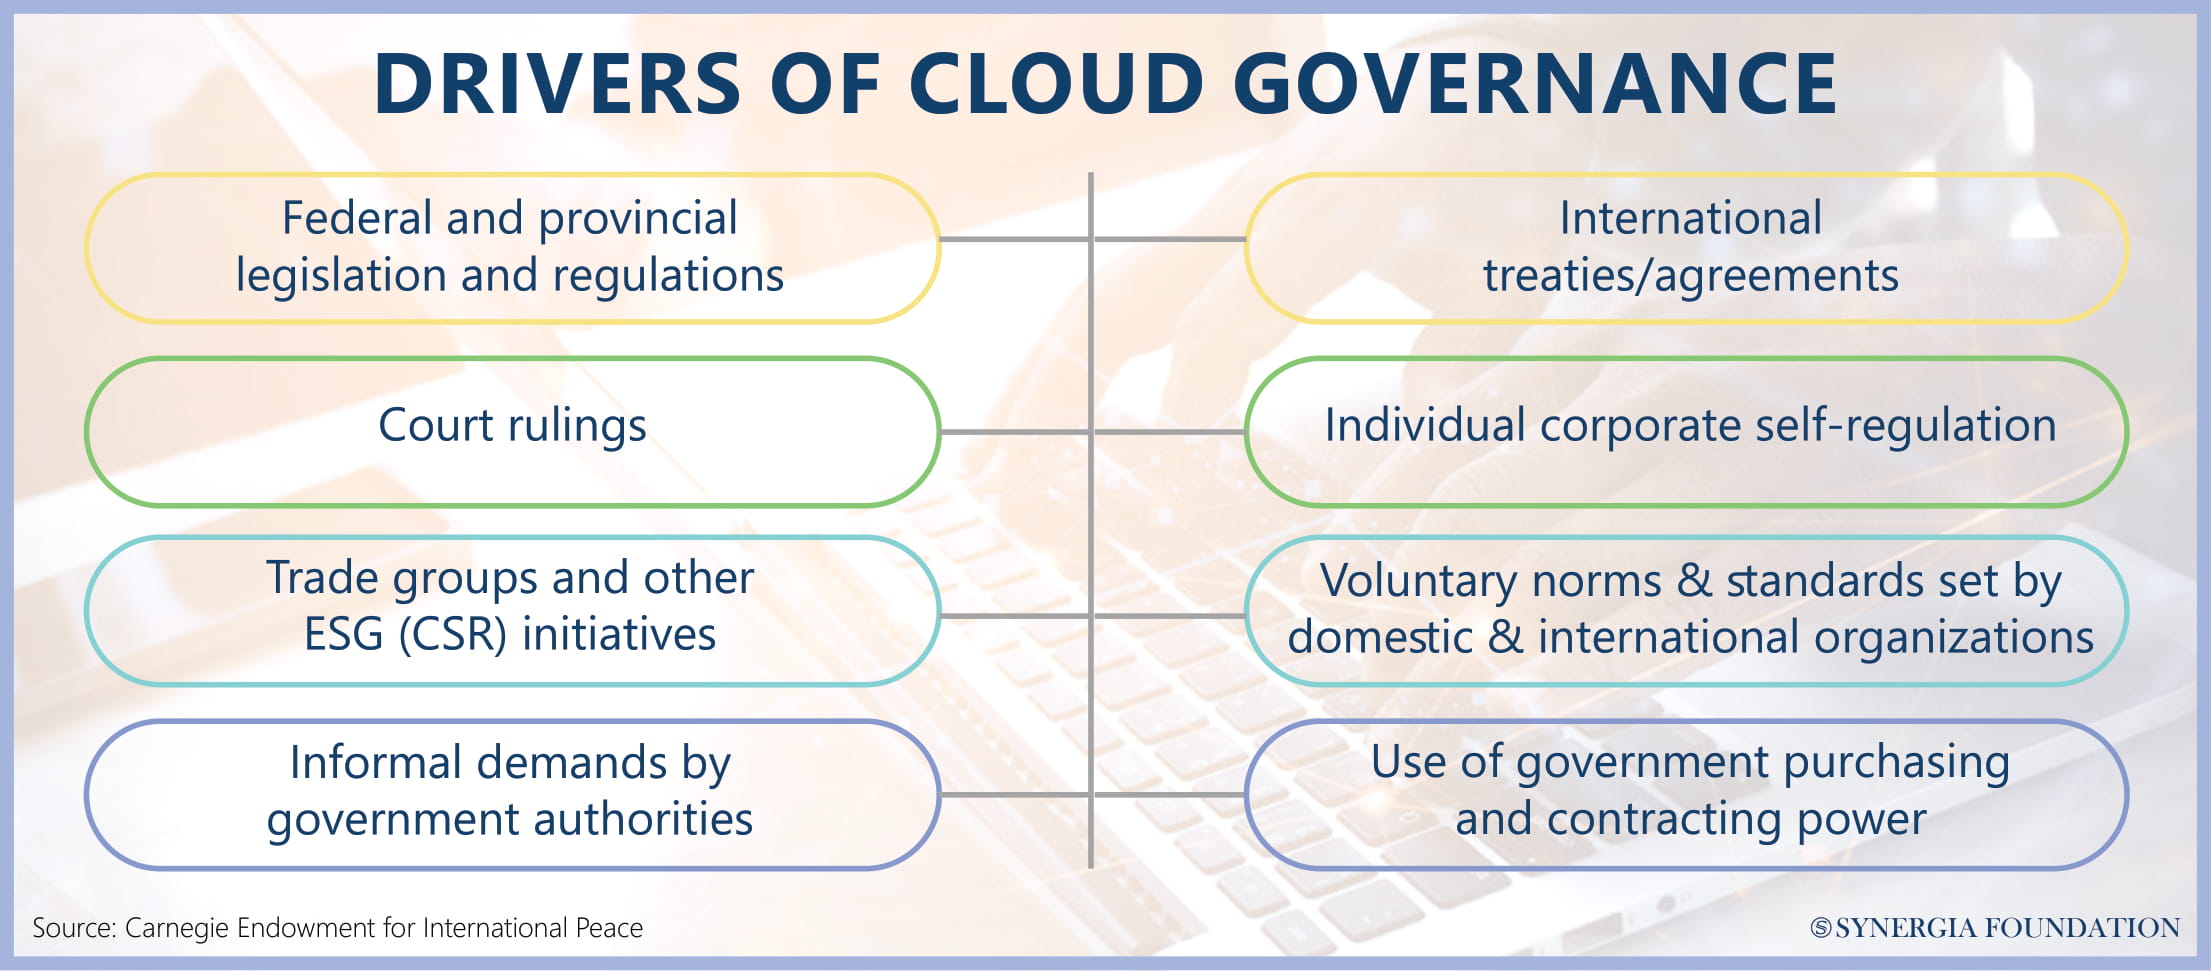 Drivers of cloud governance